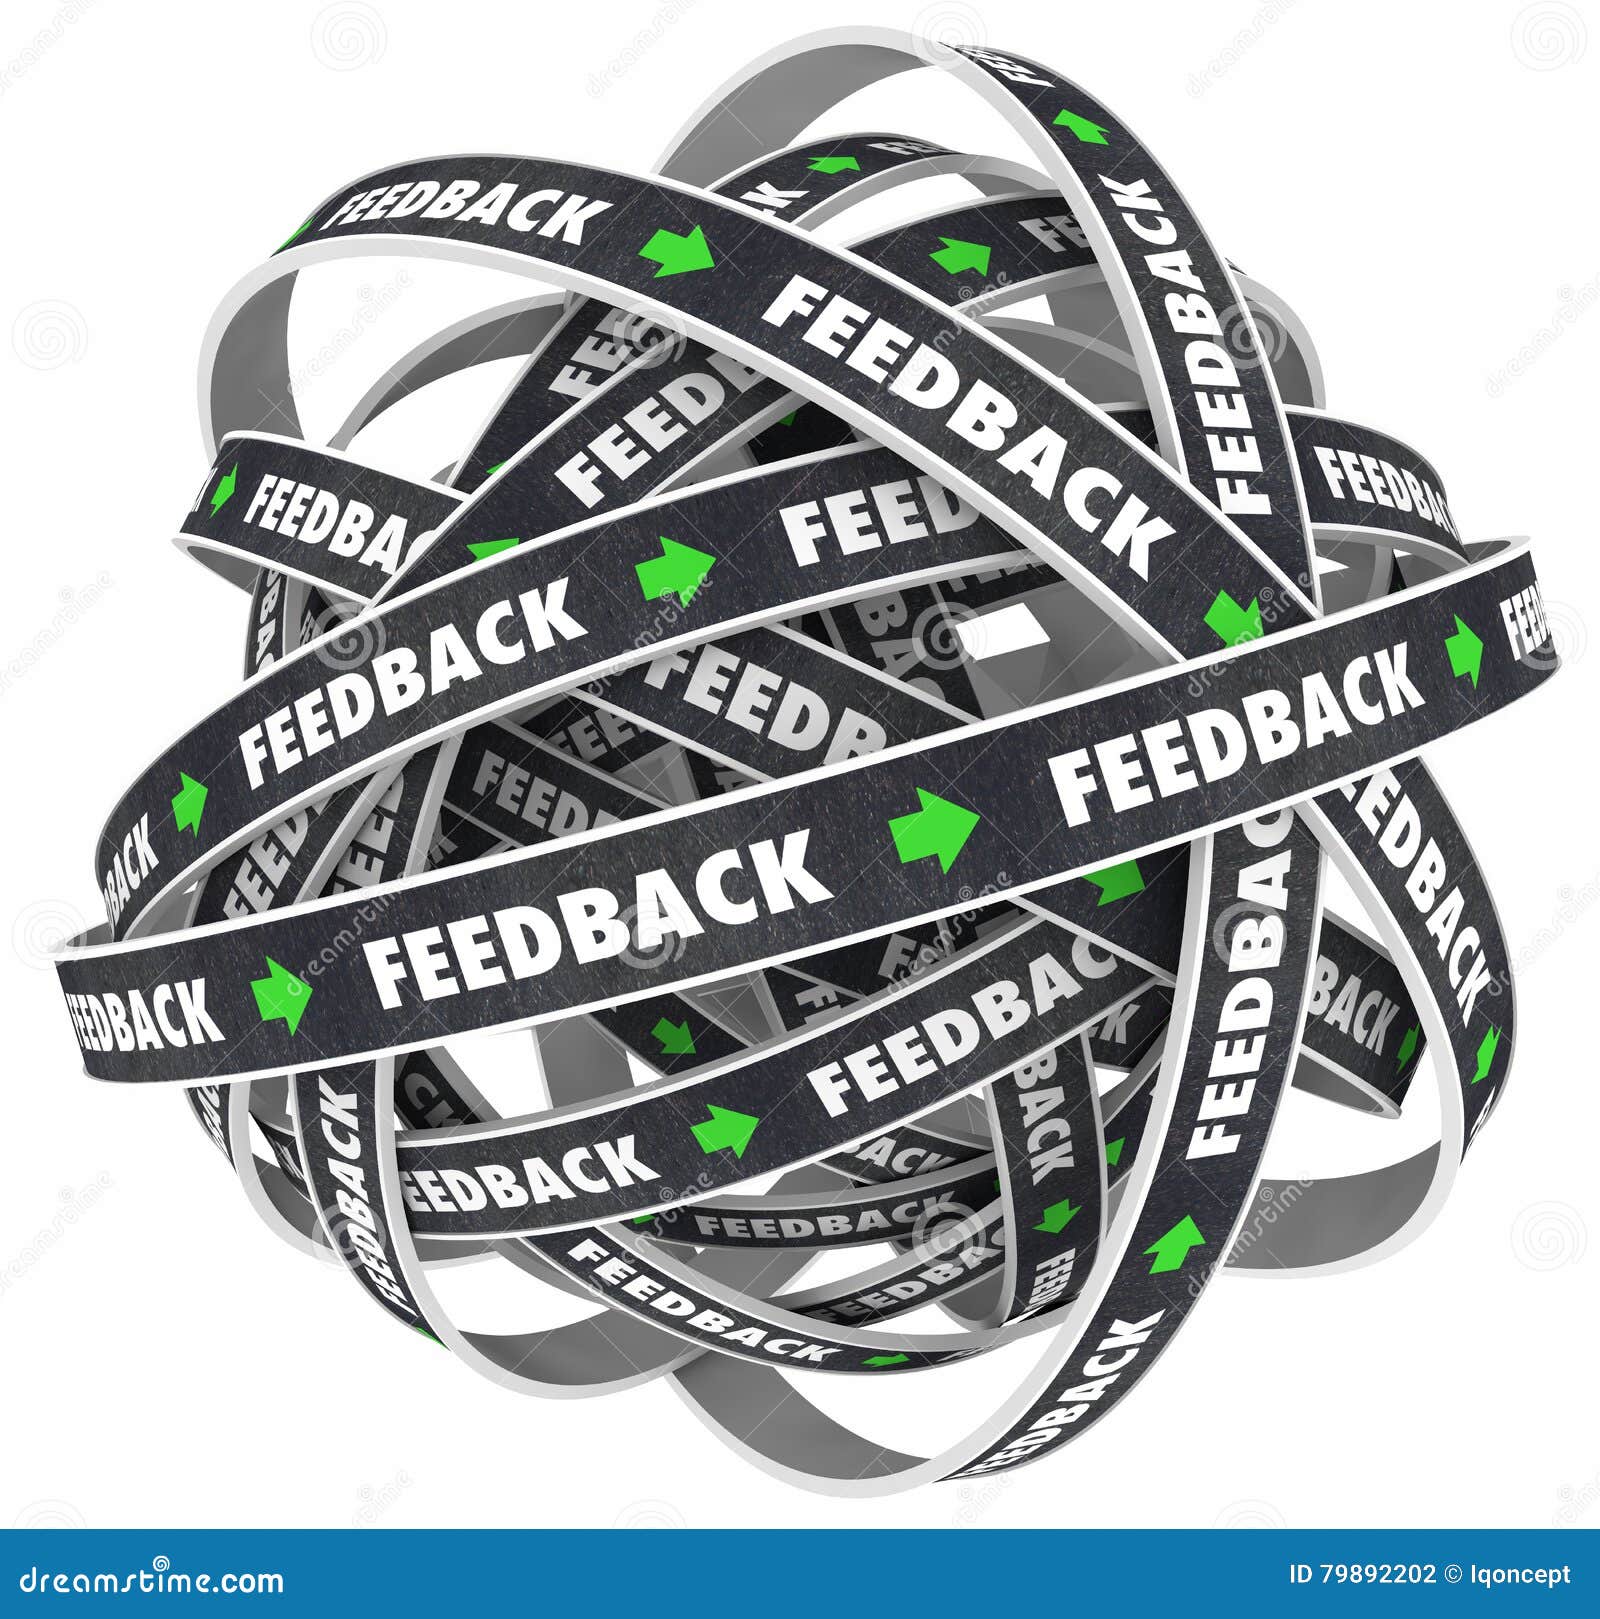 feedback loop comments response roads words